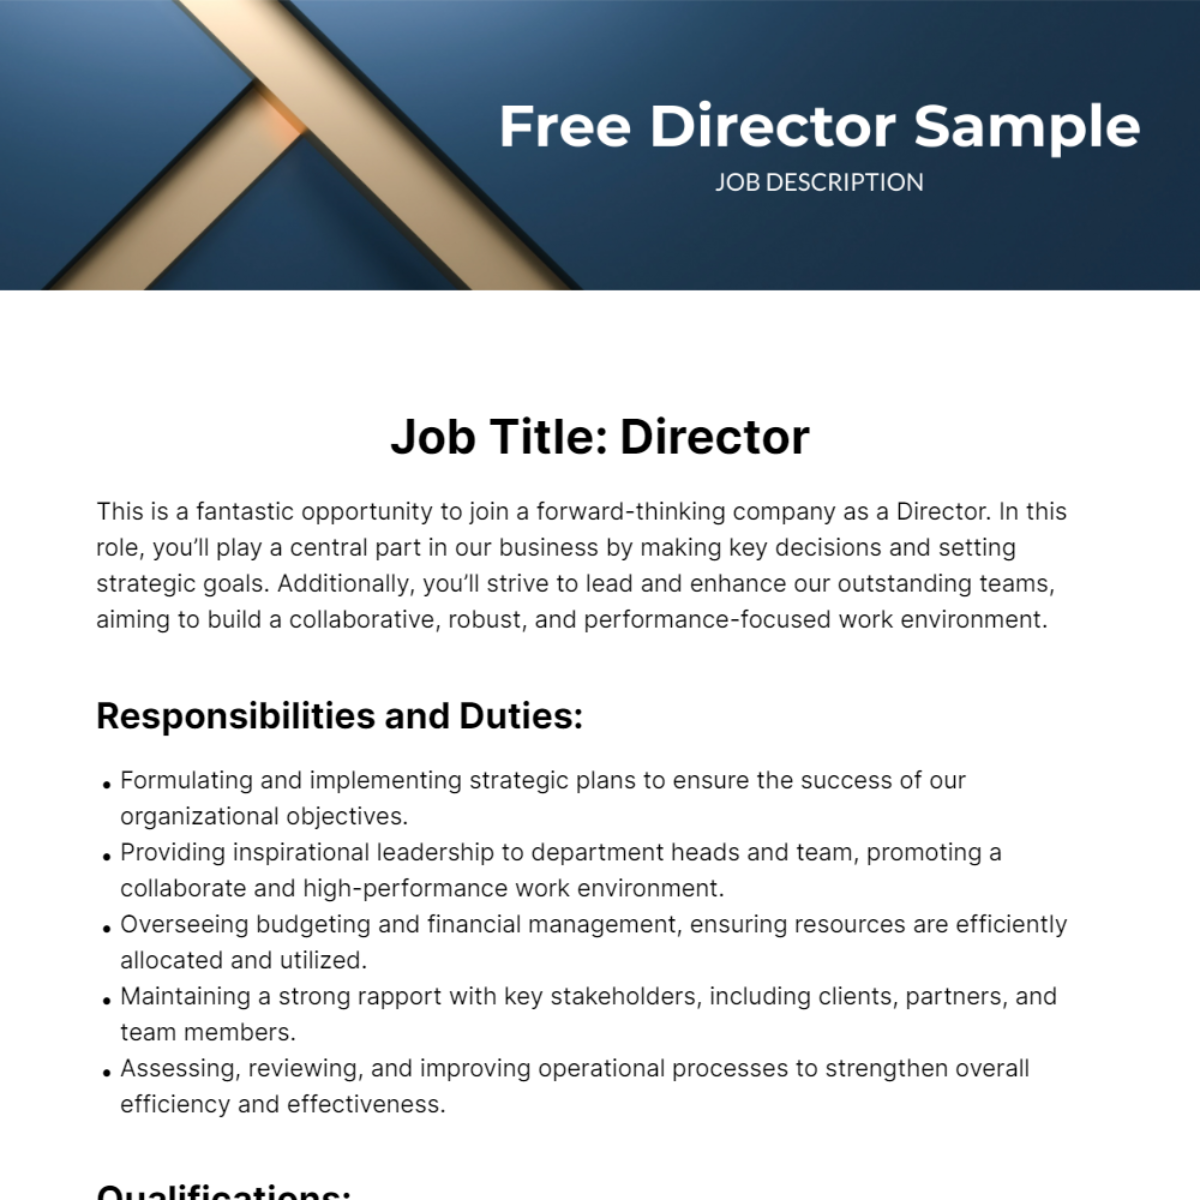 Director Sample Job Description Template